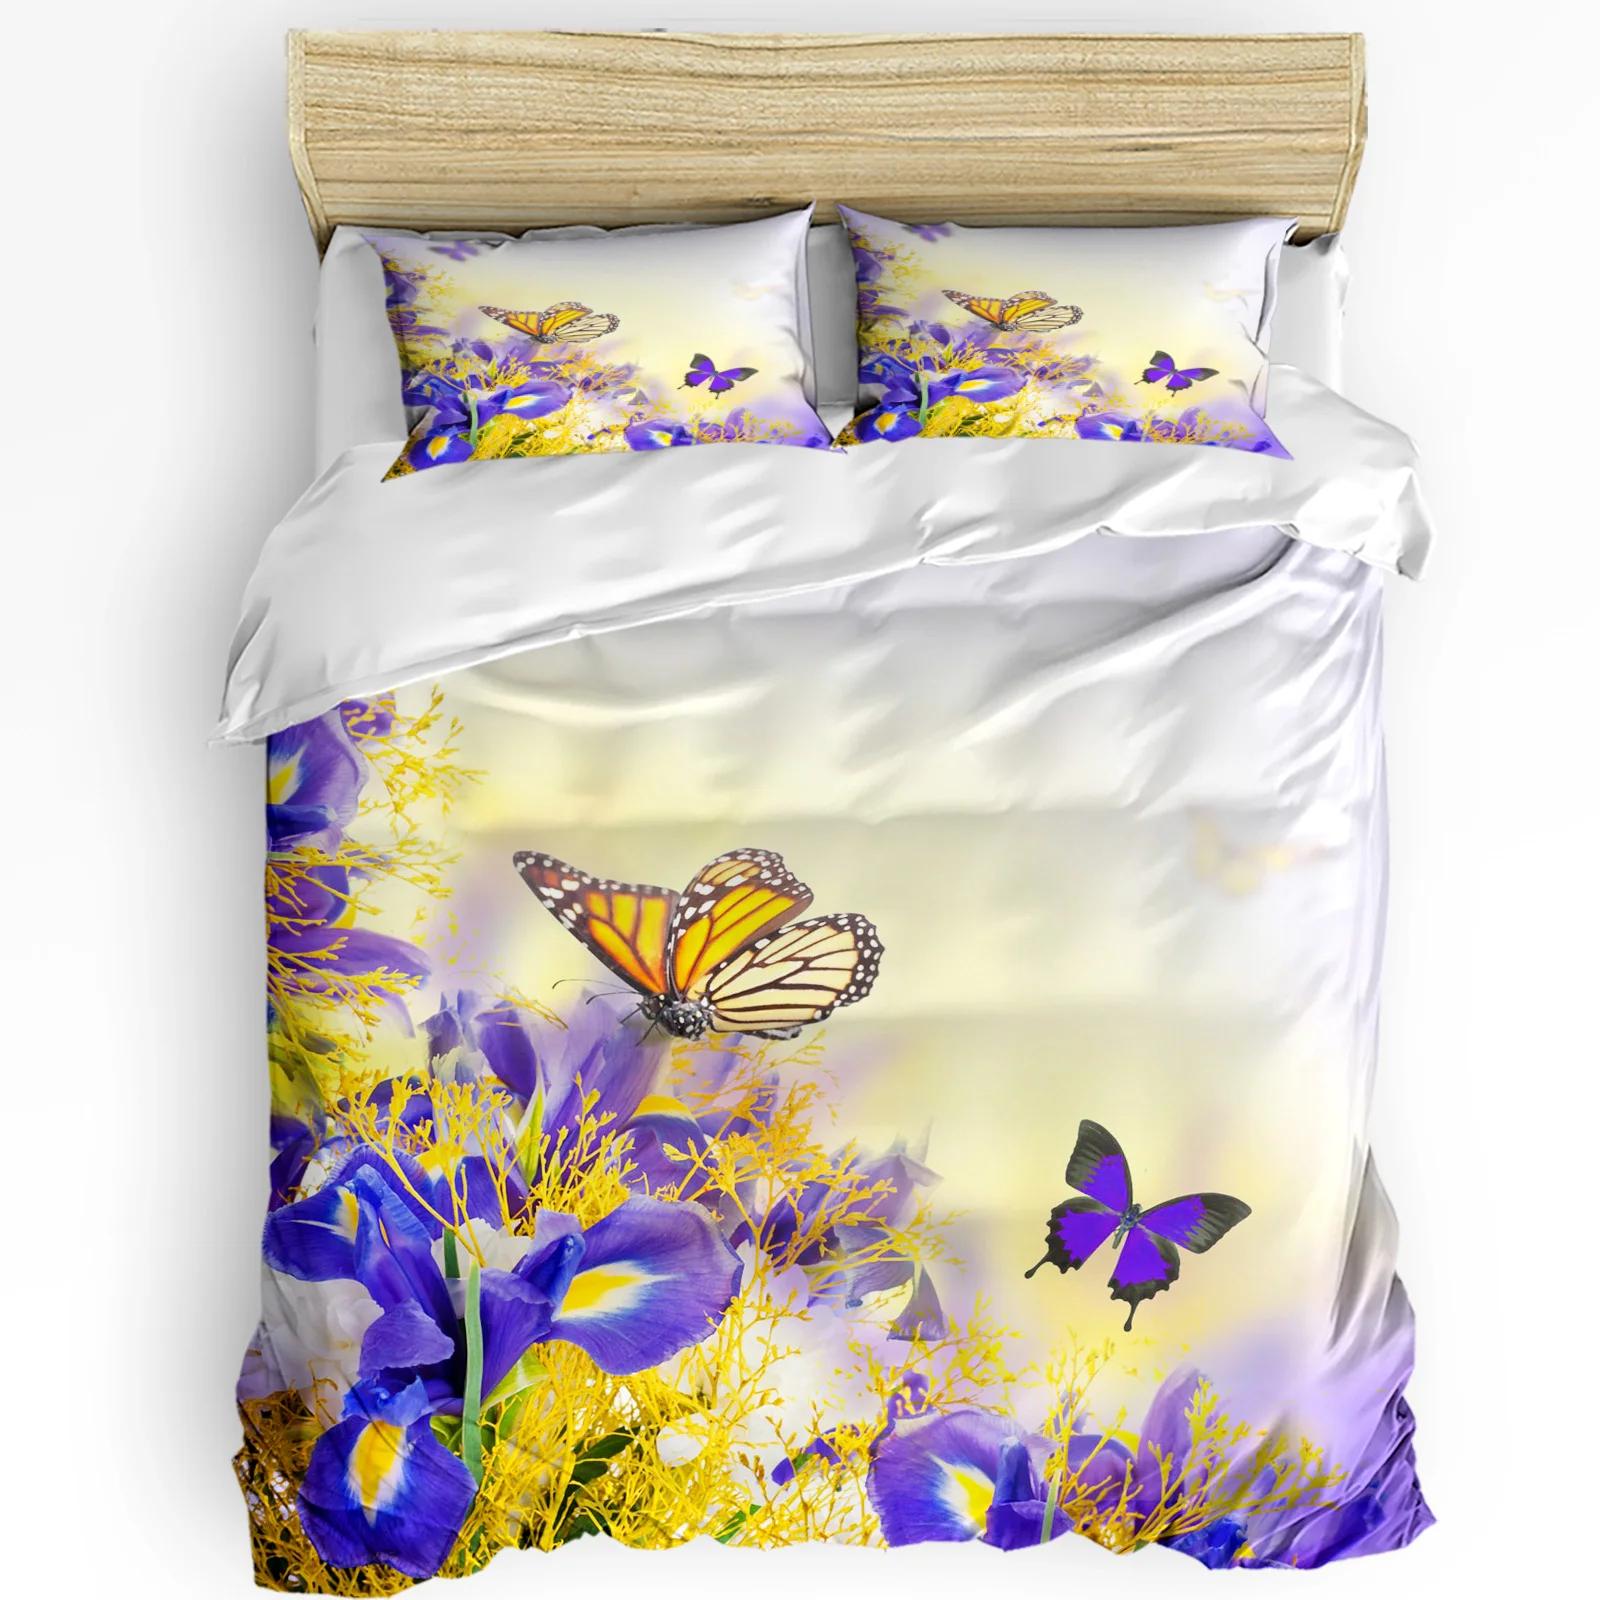 Iris Flower Butterfly Purple Bedding Set 3pcs Duvet Cover Pillowcase Kids Adult Quilt Cover Double Bed Set Home Text